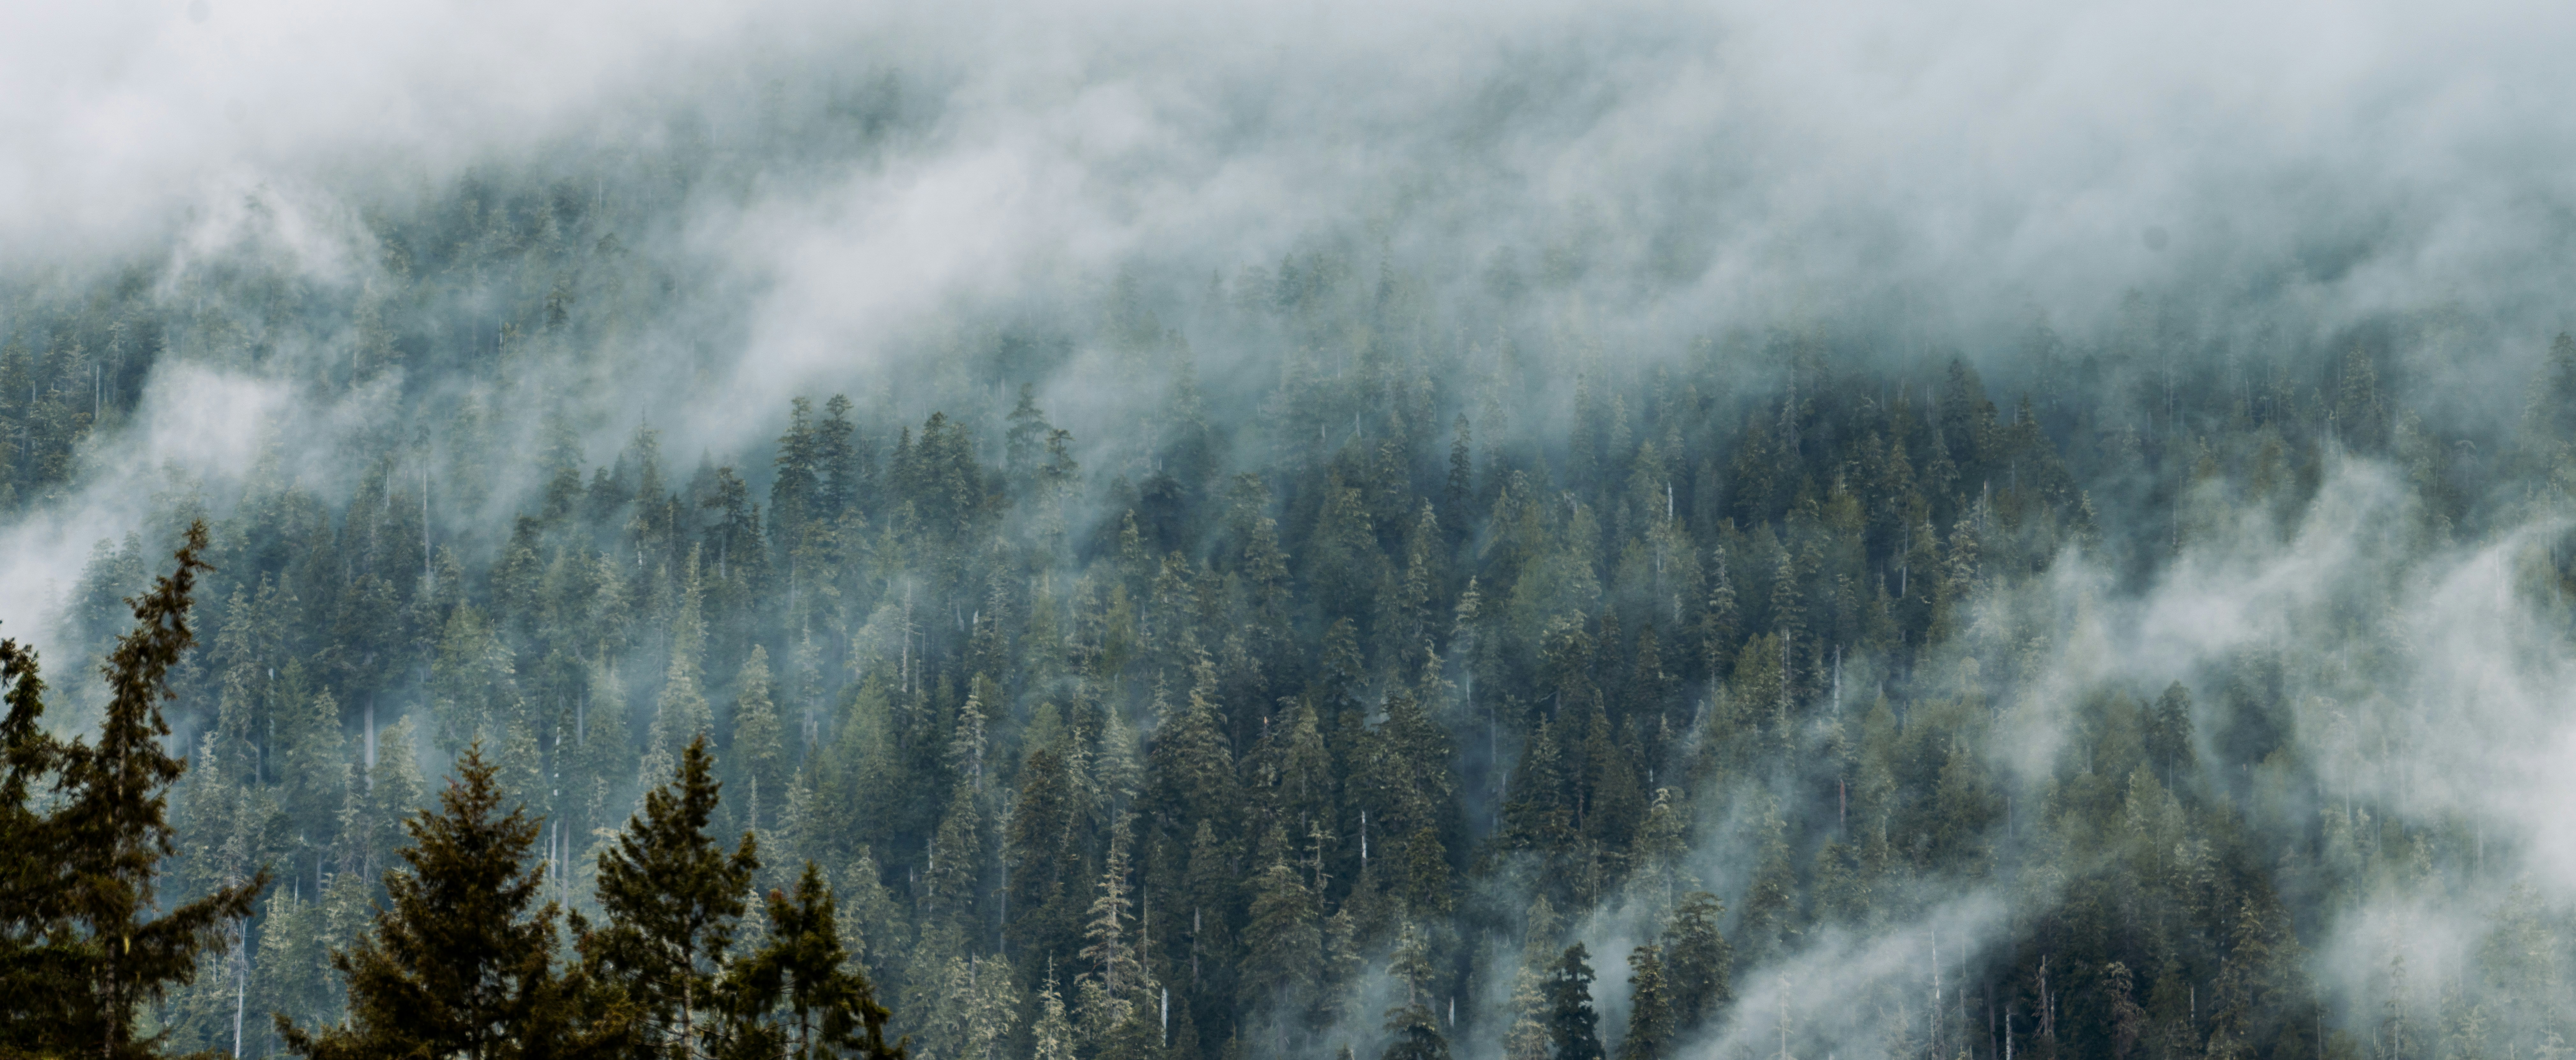 Fog rolling over the rainforest near Lake Quinalt in Washington.